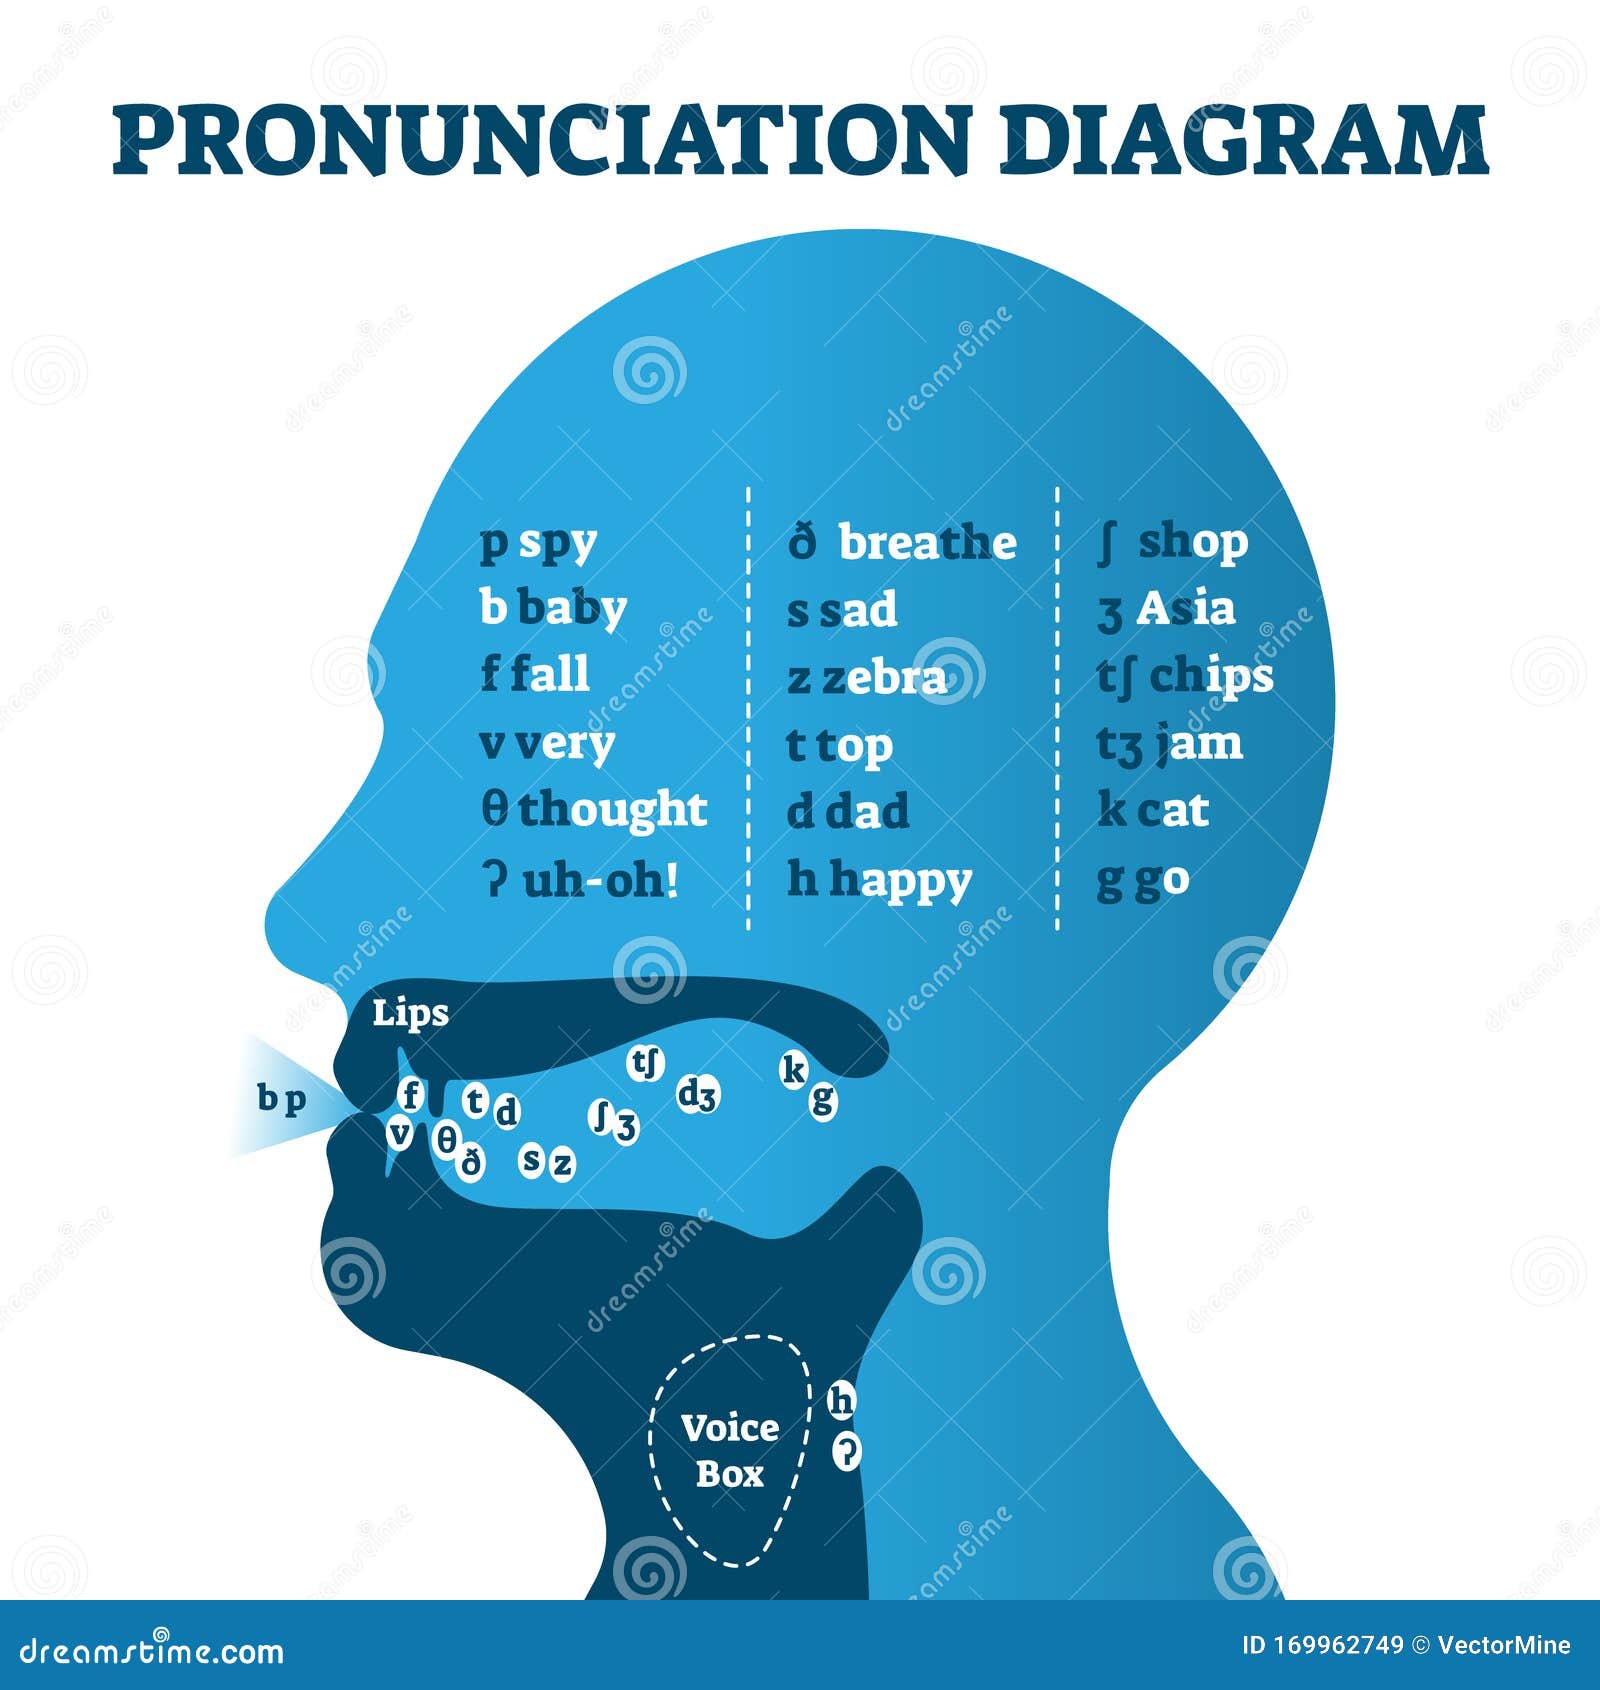 correct pronunciation journey